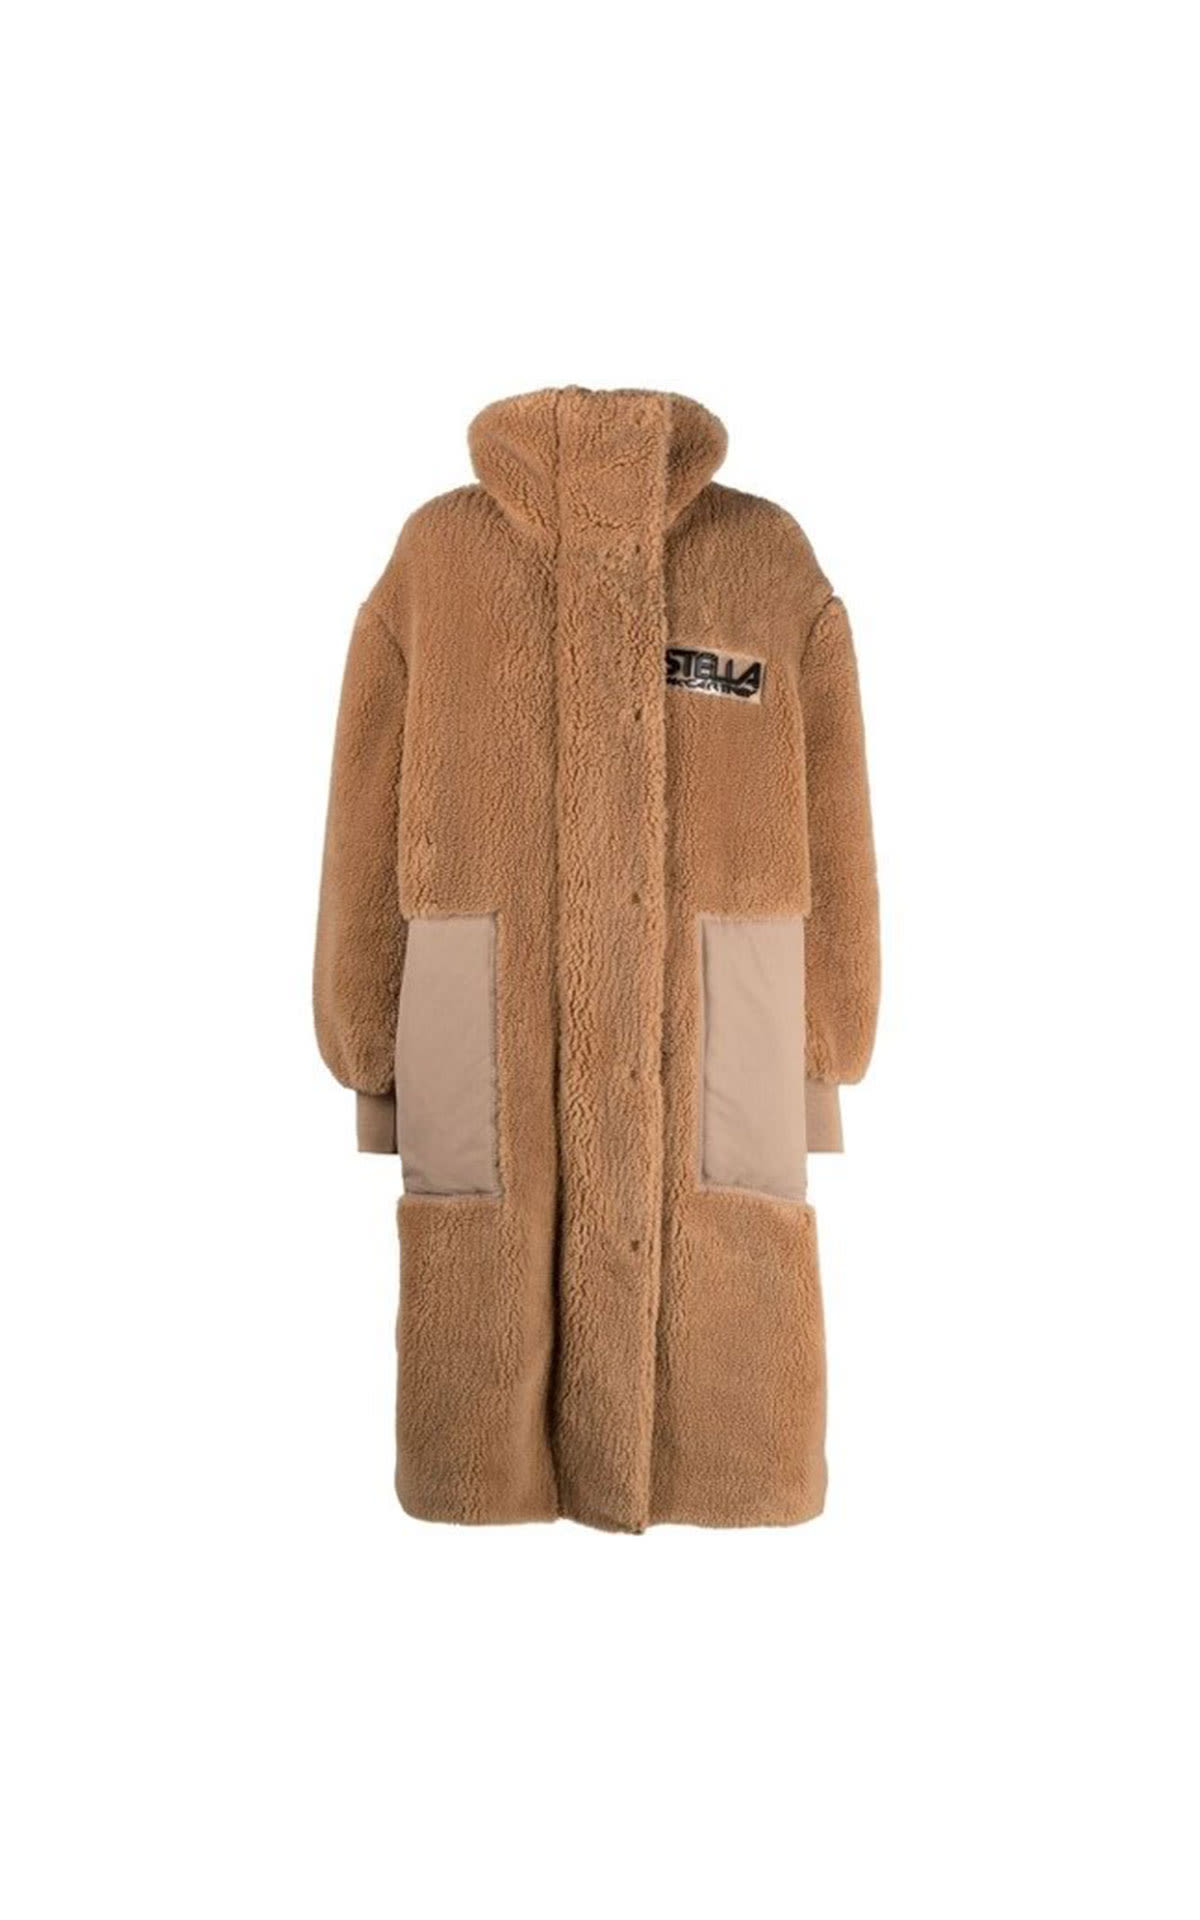 Stella McCartney Luna teddy coat from Bicester Village